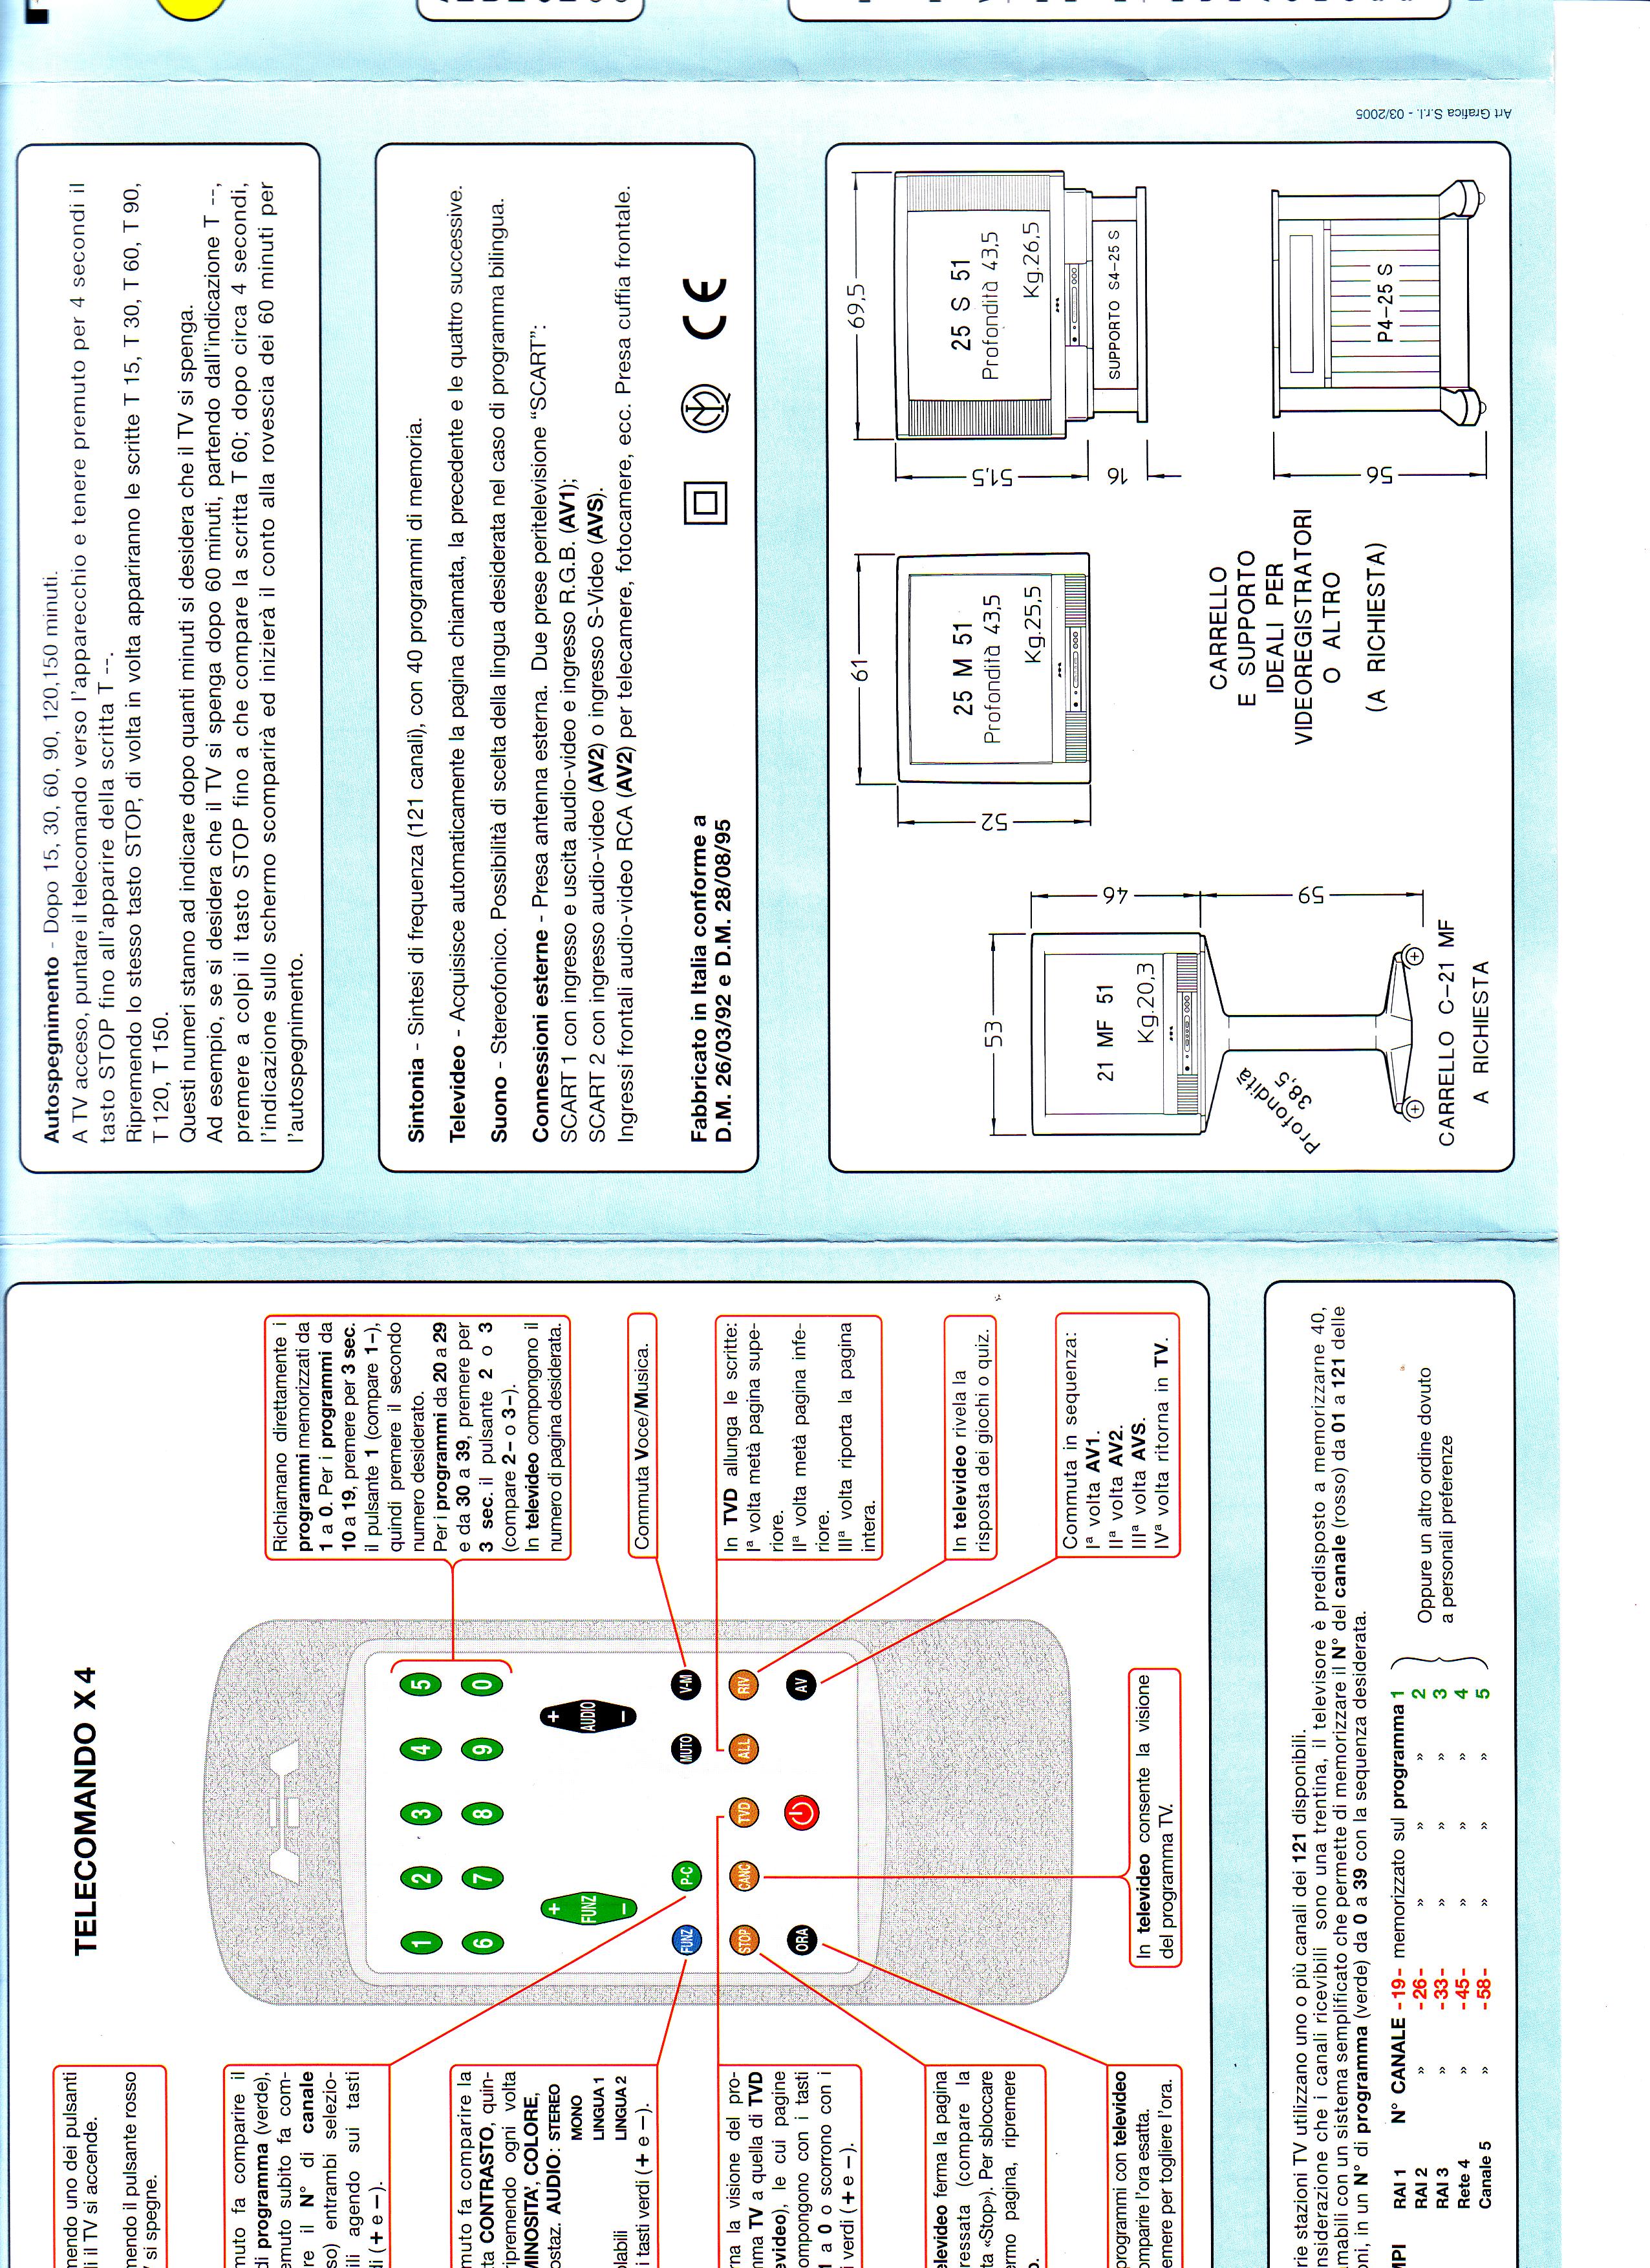 Mivar 25S51 Schematic diagram of new Mivar
Thx Eservice for your big help!